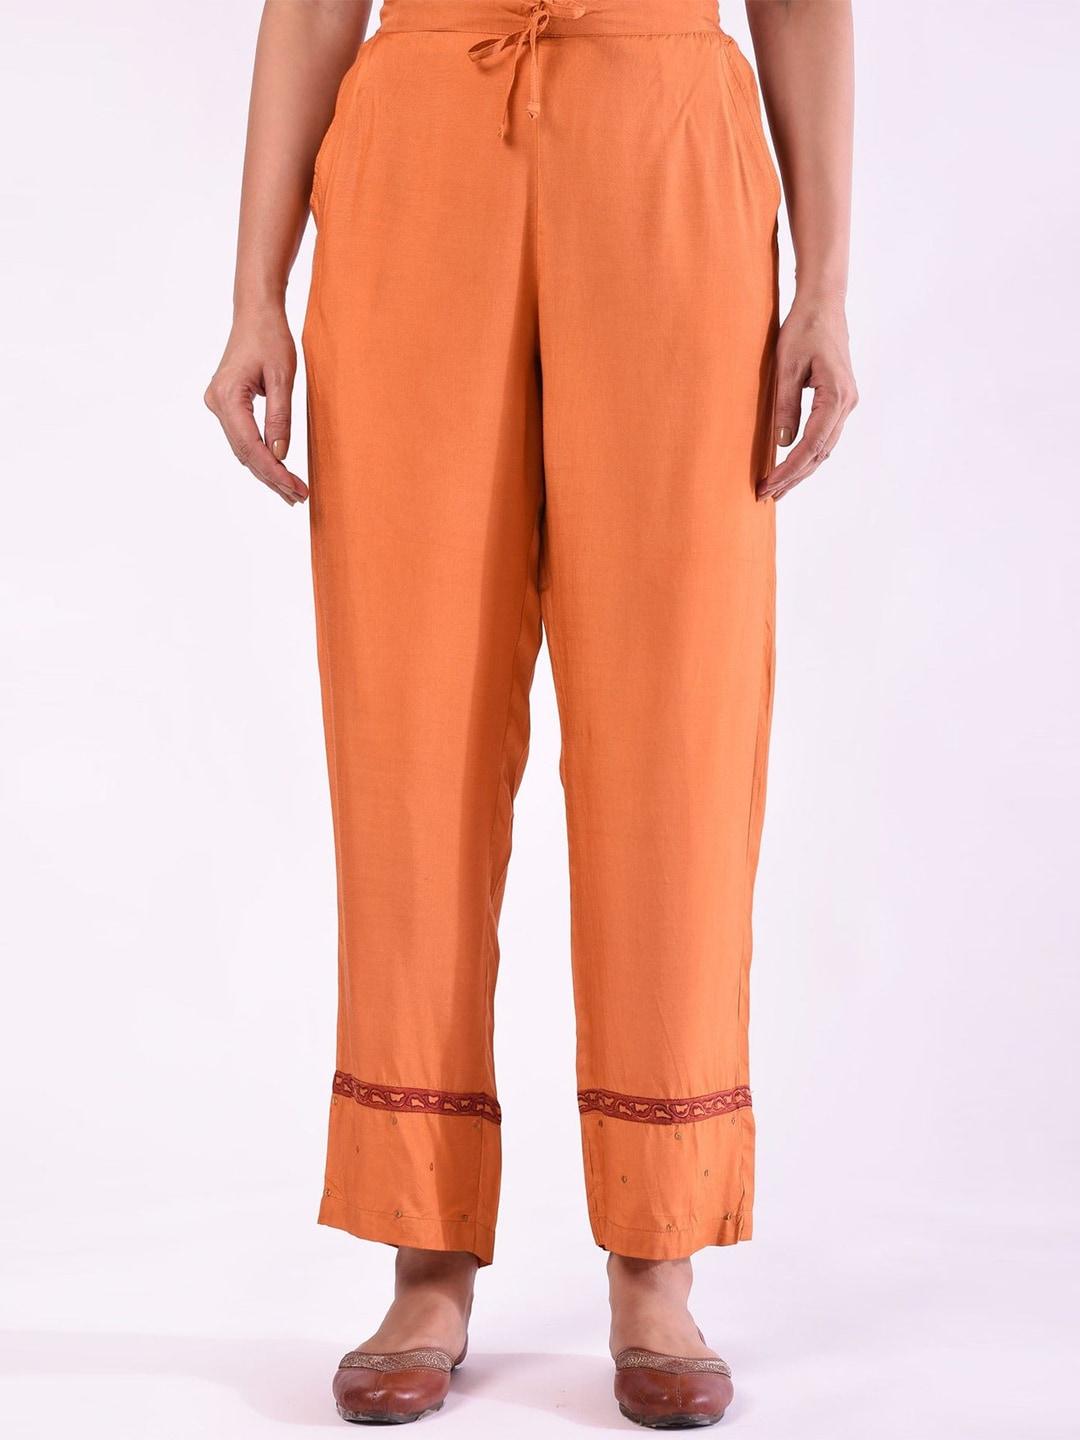 prakriti jaipur printed mid-rise trouser